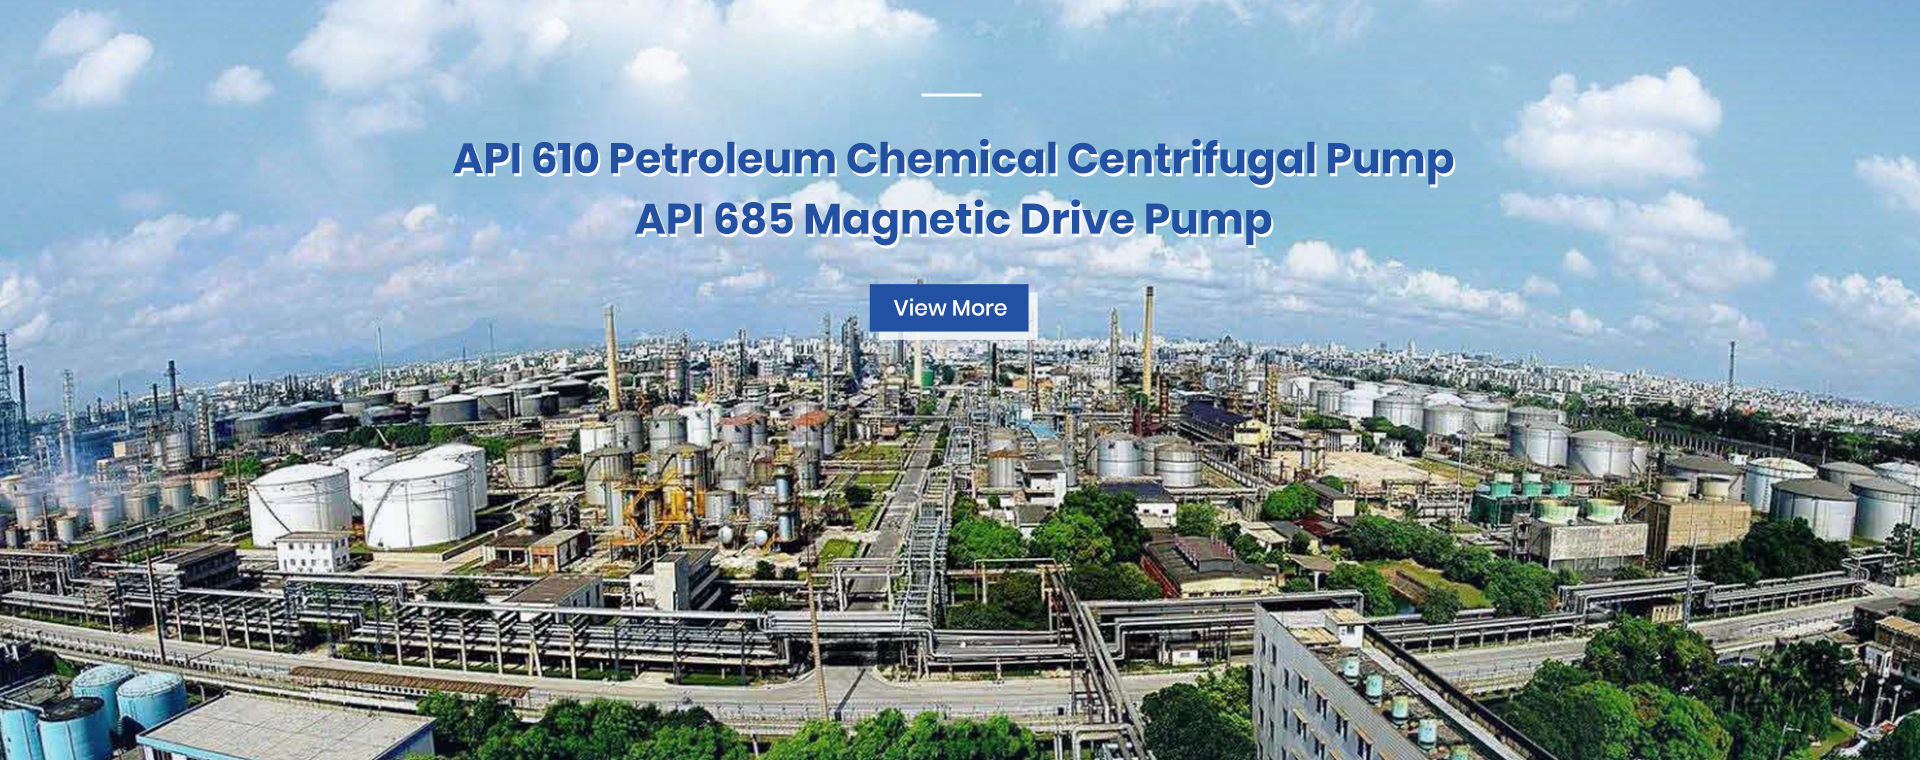 API 610 Petroleum Chemical Centrifugal Pump API 685 Magnetic Drive Pump